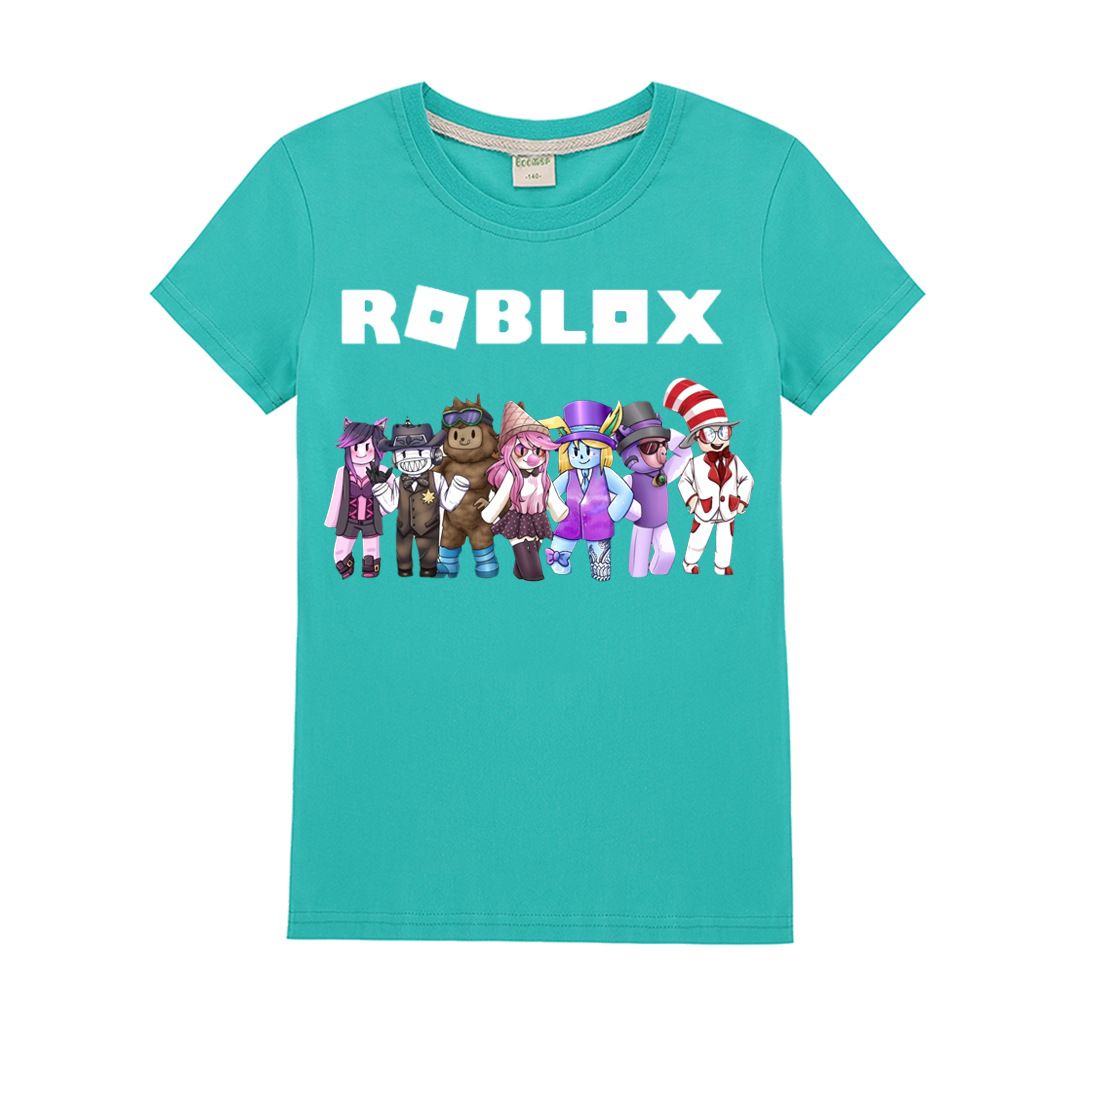 roblox shirt codes for girls shirts